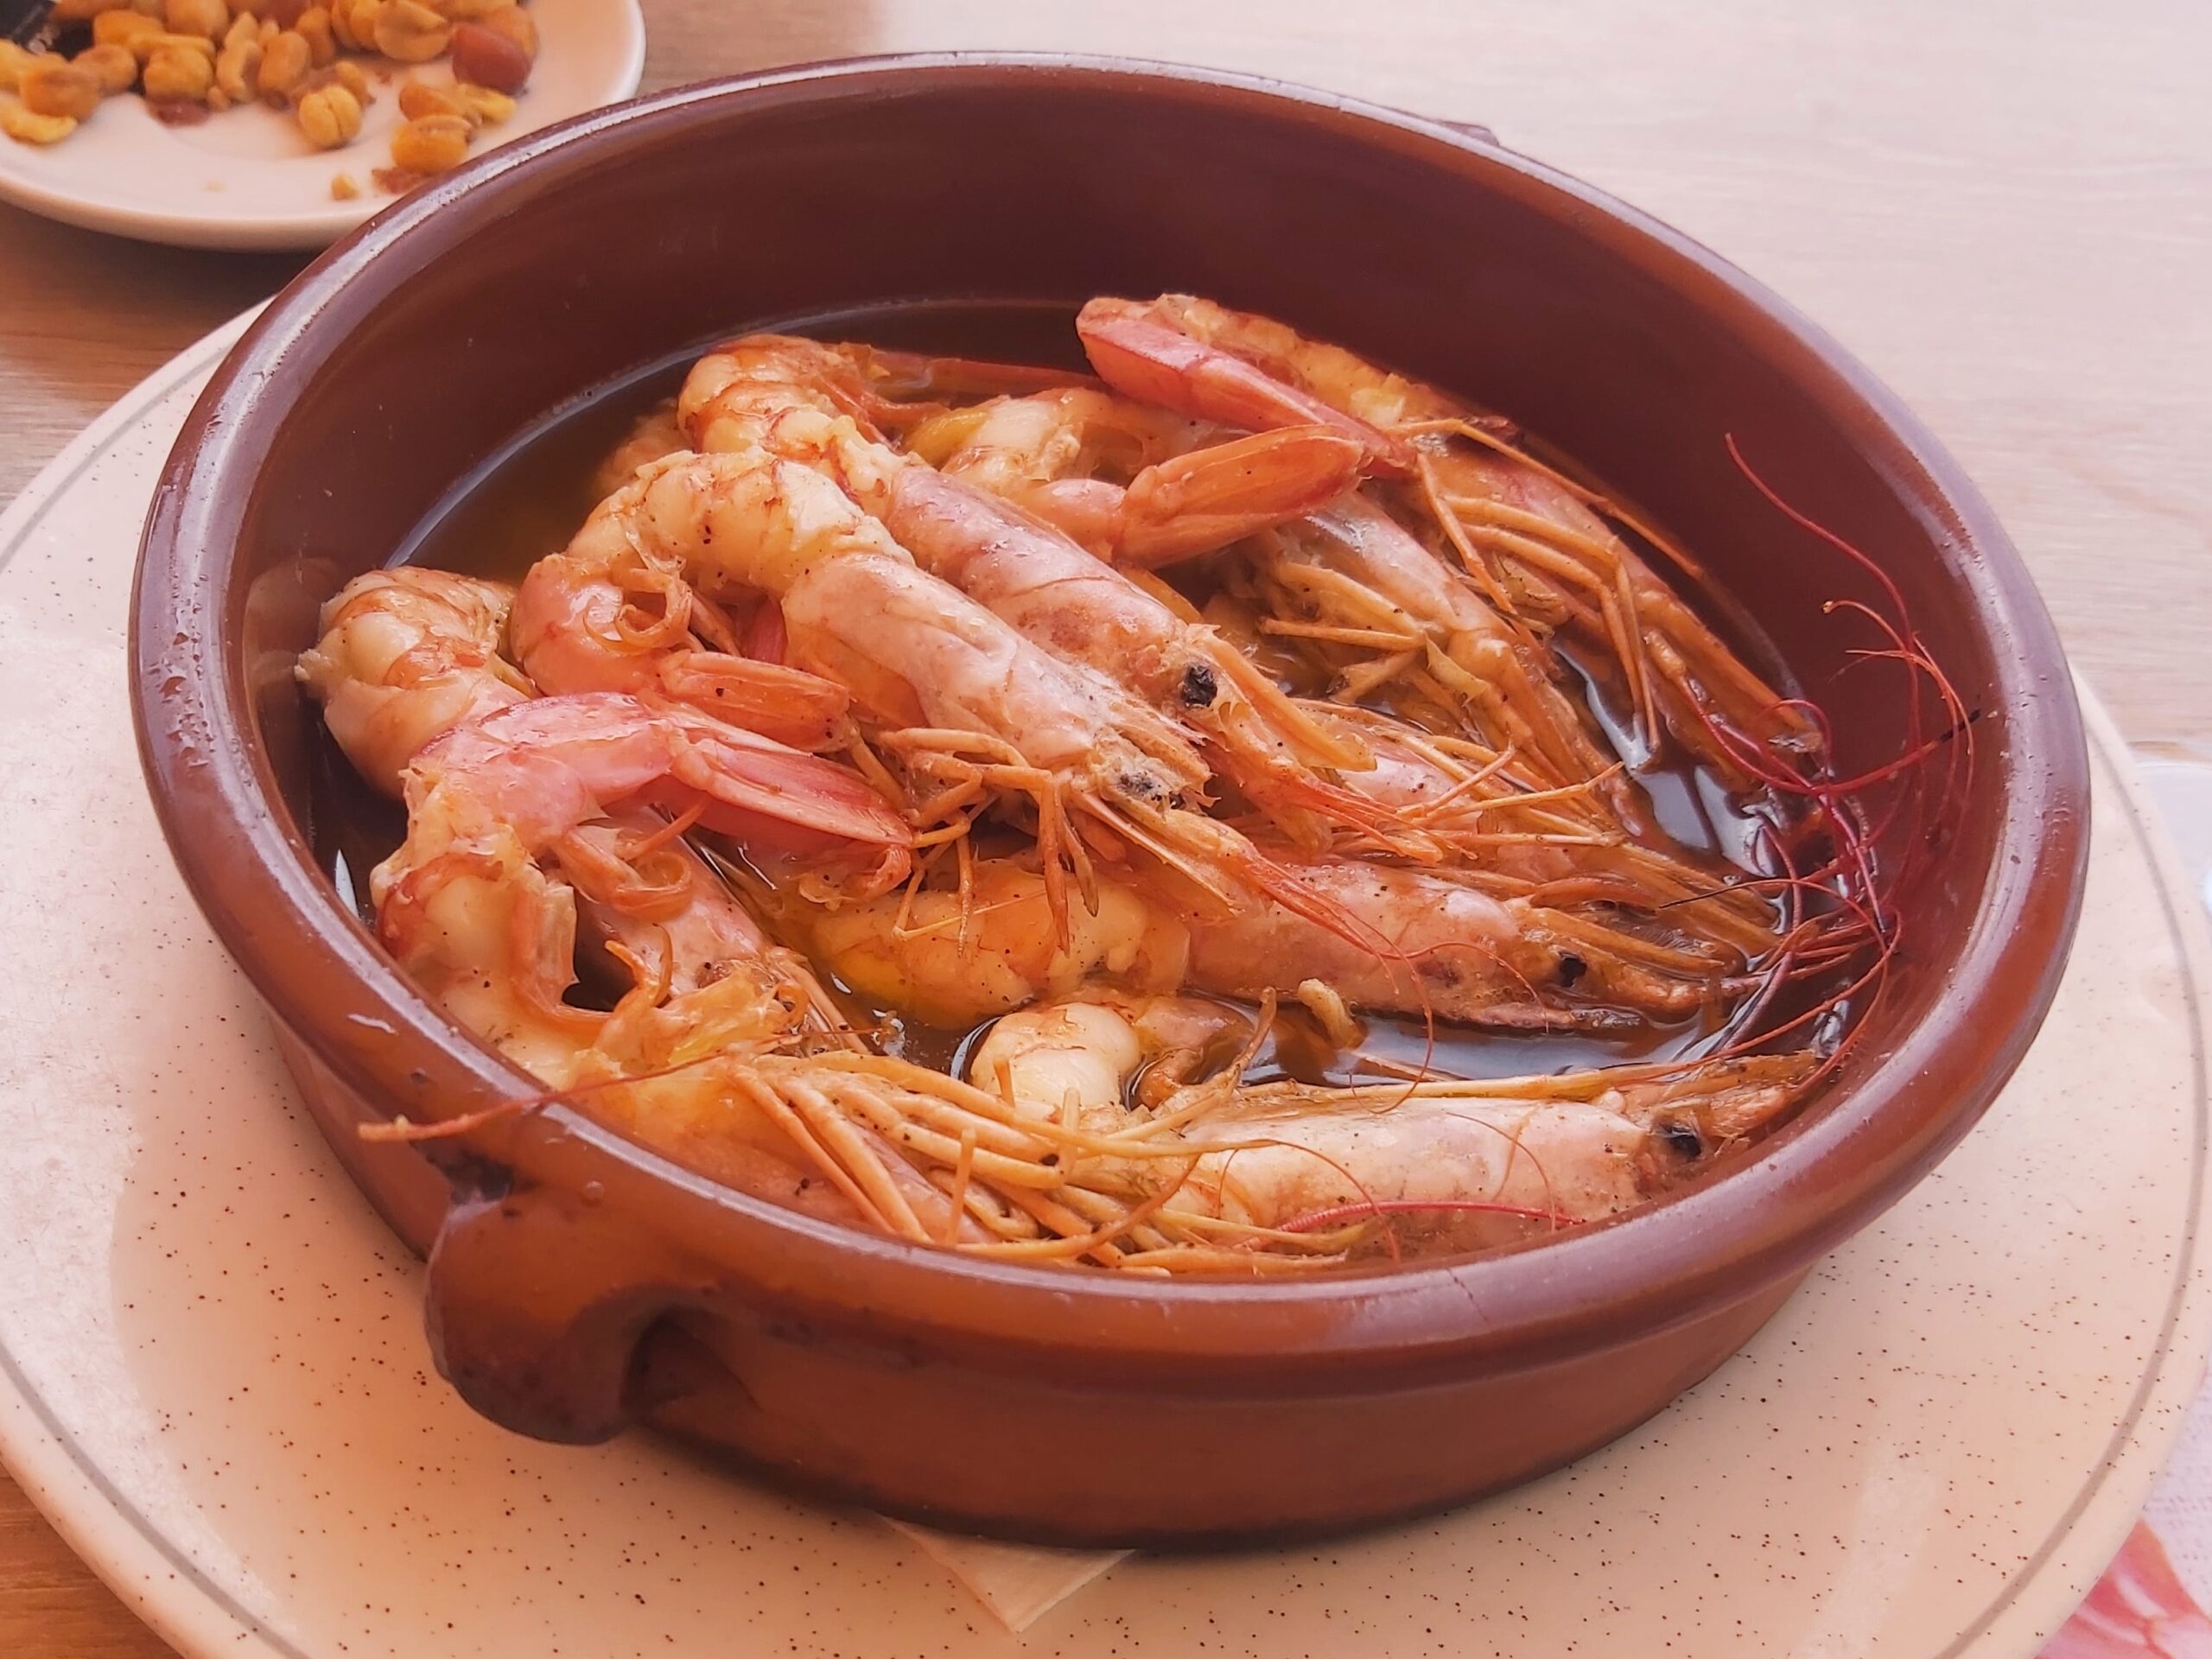 Prawn dish from Il Pomodoro in Lloret de Mar, Spain